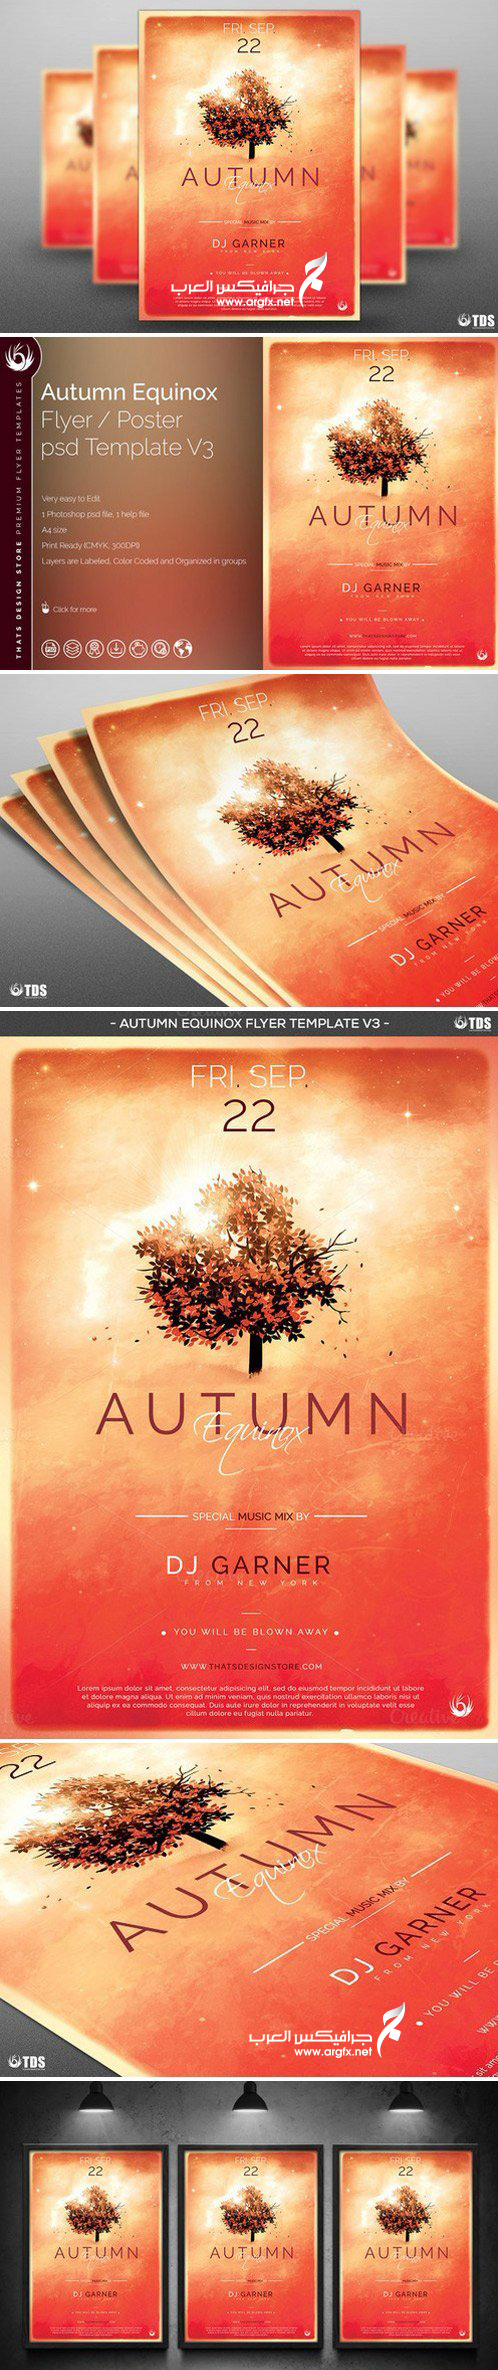 Autumn Equinox Flyer Template